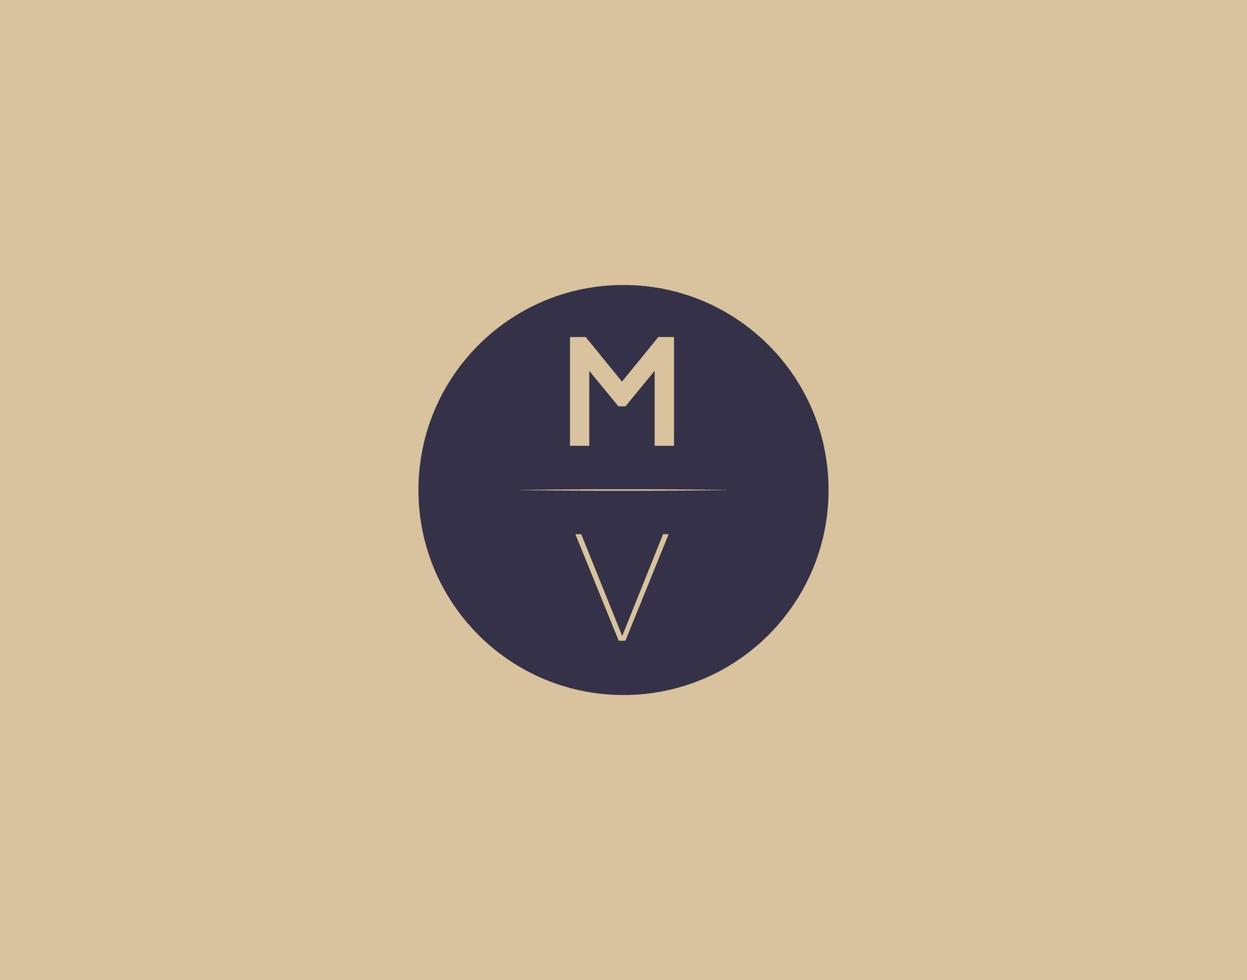 MV letter modern elegant logo design vector images